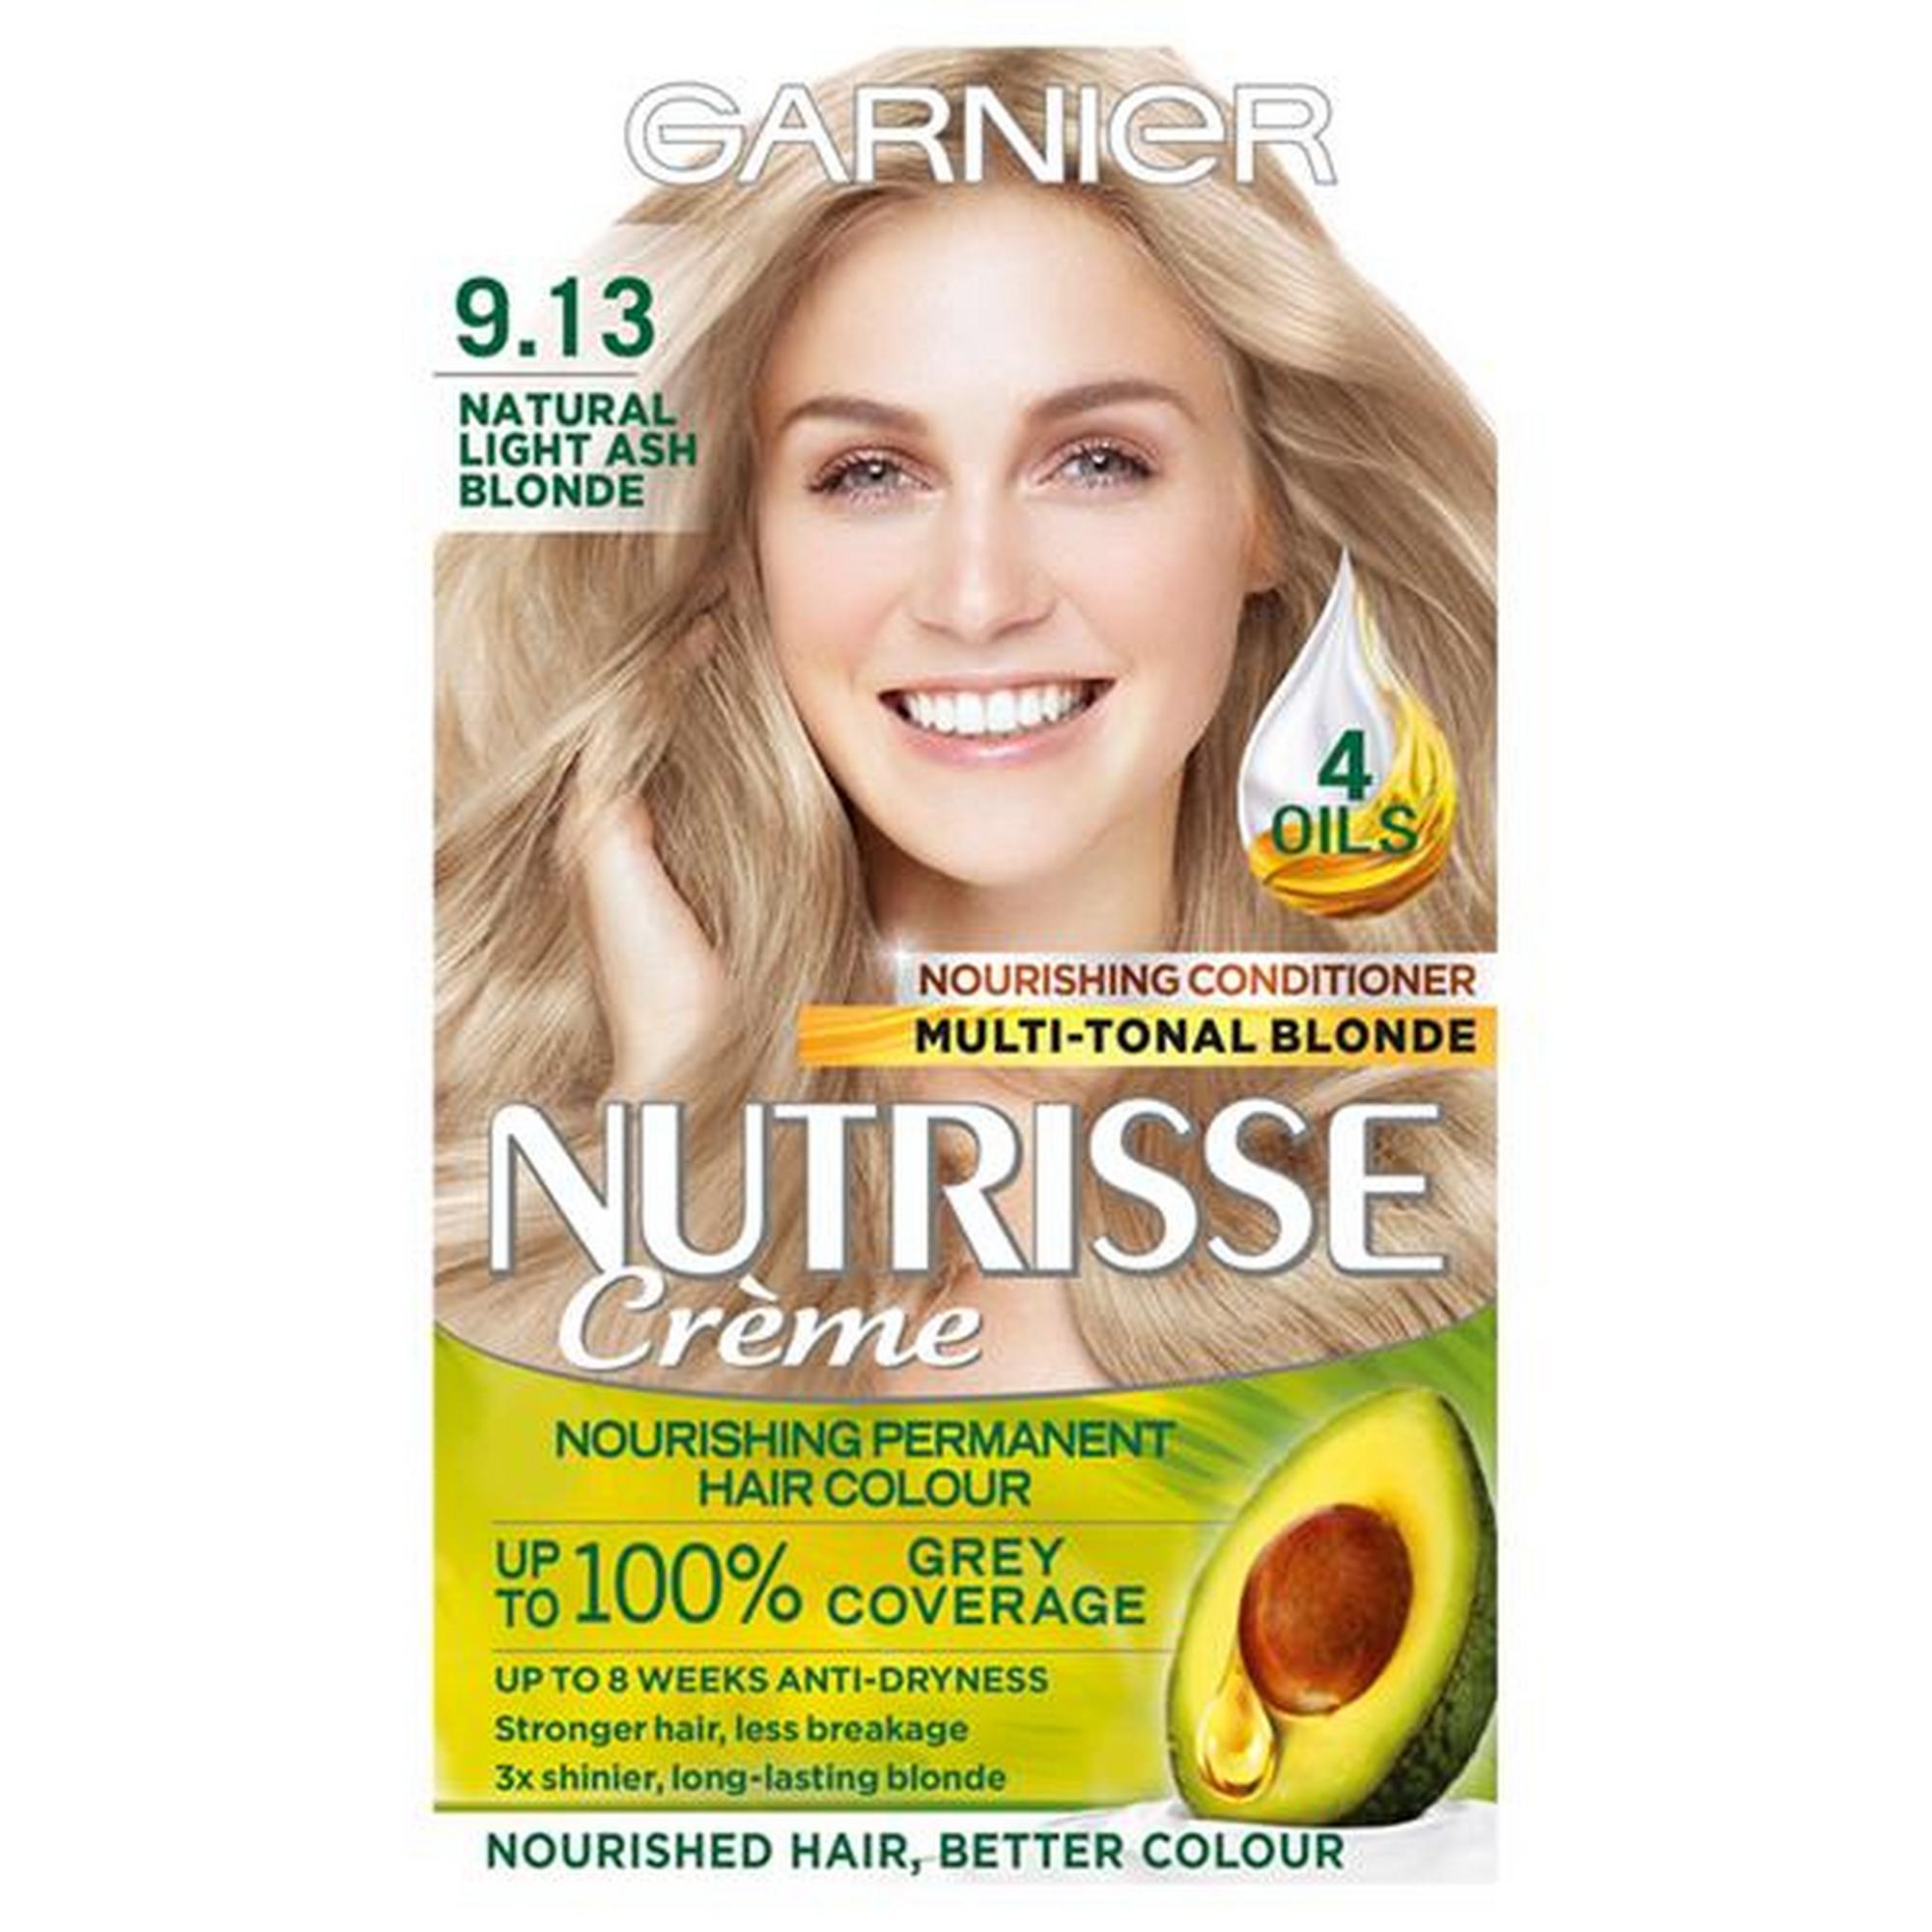 Garnier Nutrisse Ultra Crème Permanent Hair Dye Natural Light Ash Blonde